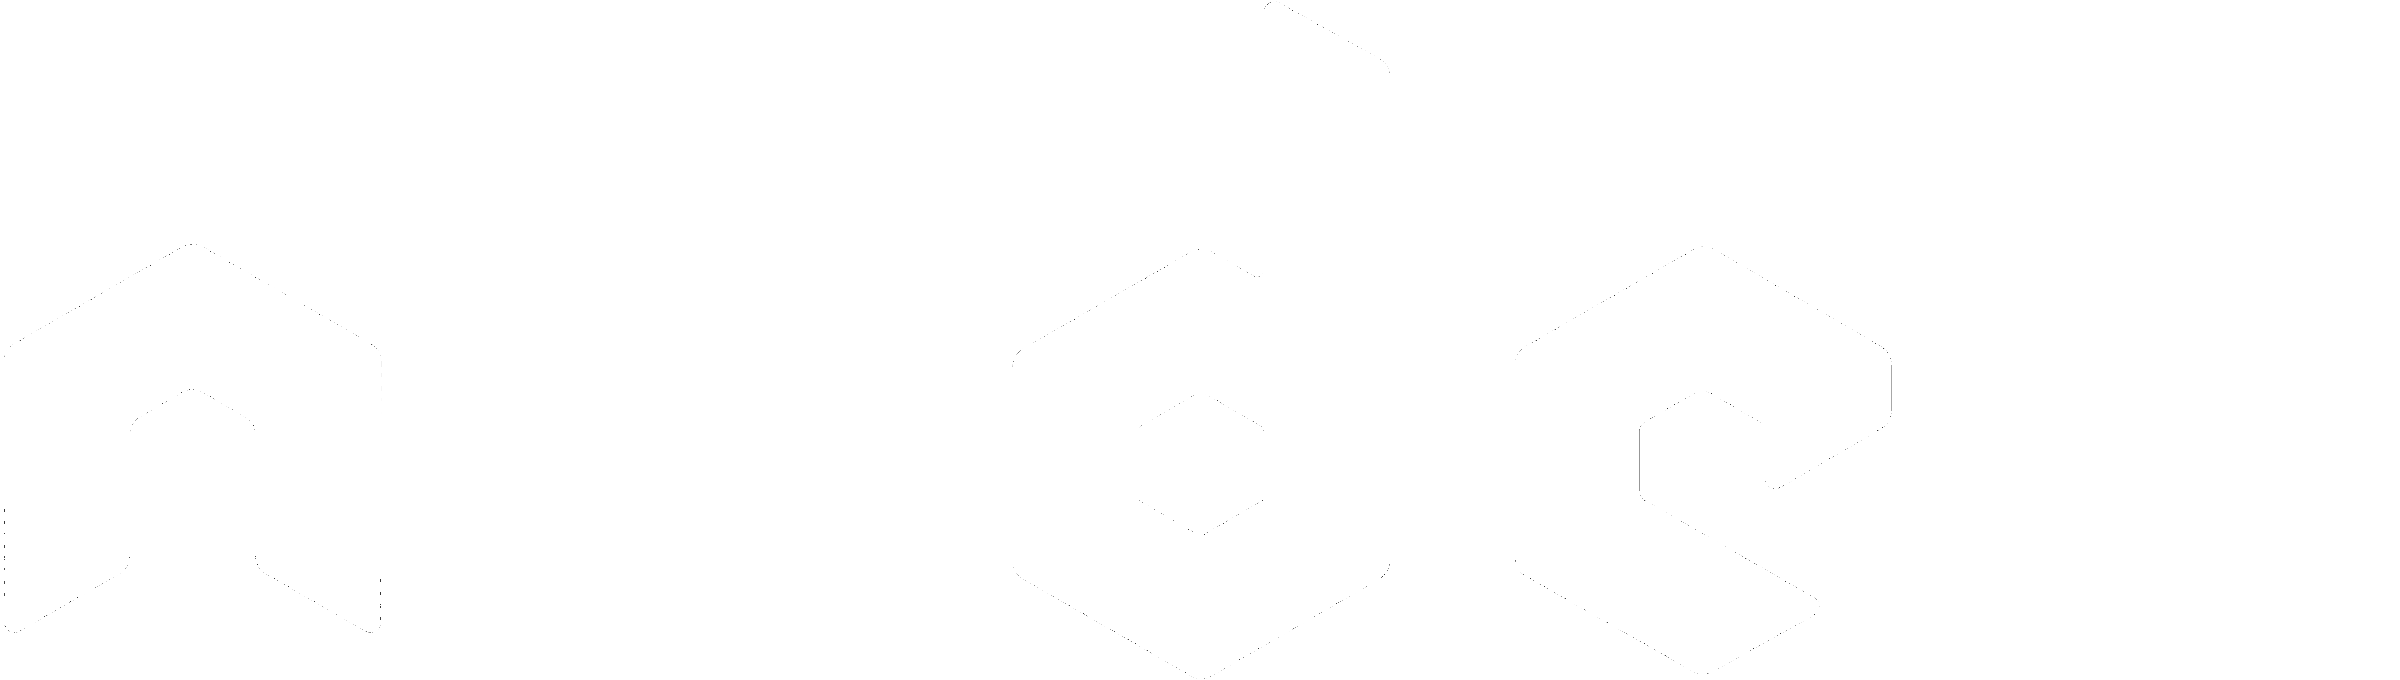 Node.js Logo - NodeJS Logo PNG Transparent & SVG Vector - Freebie Supply